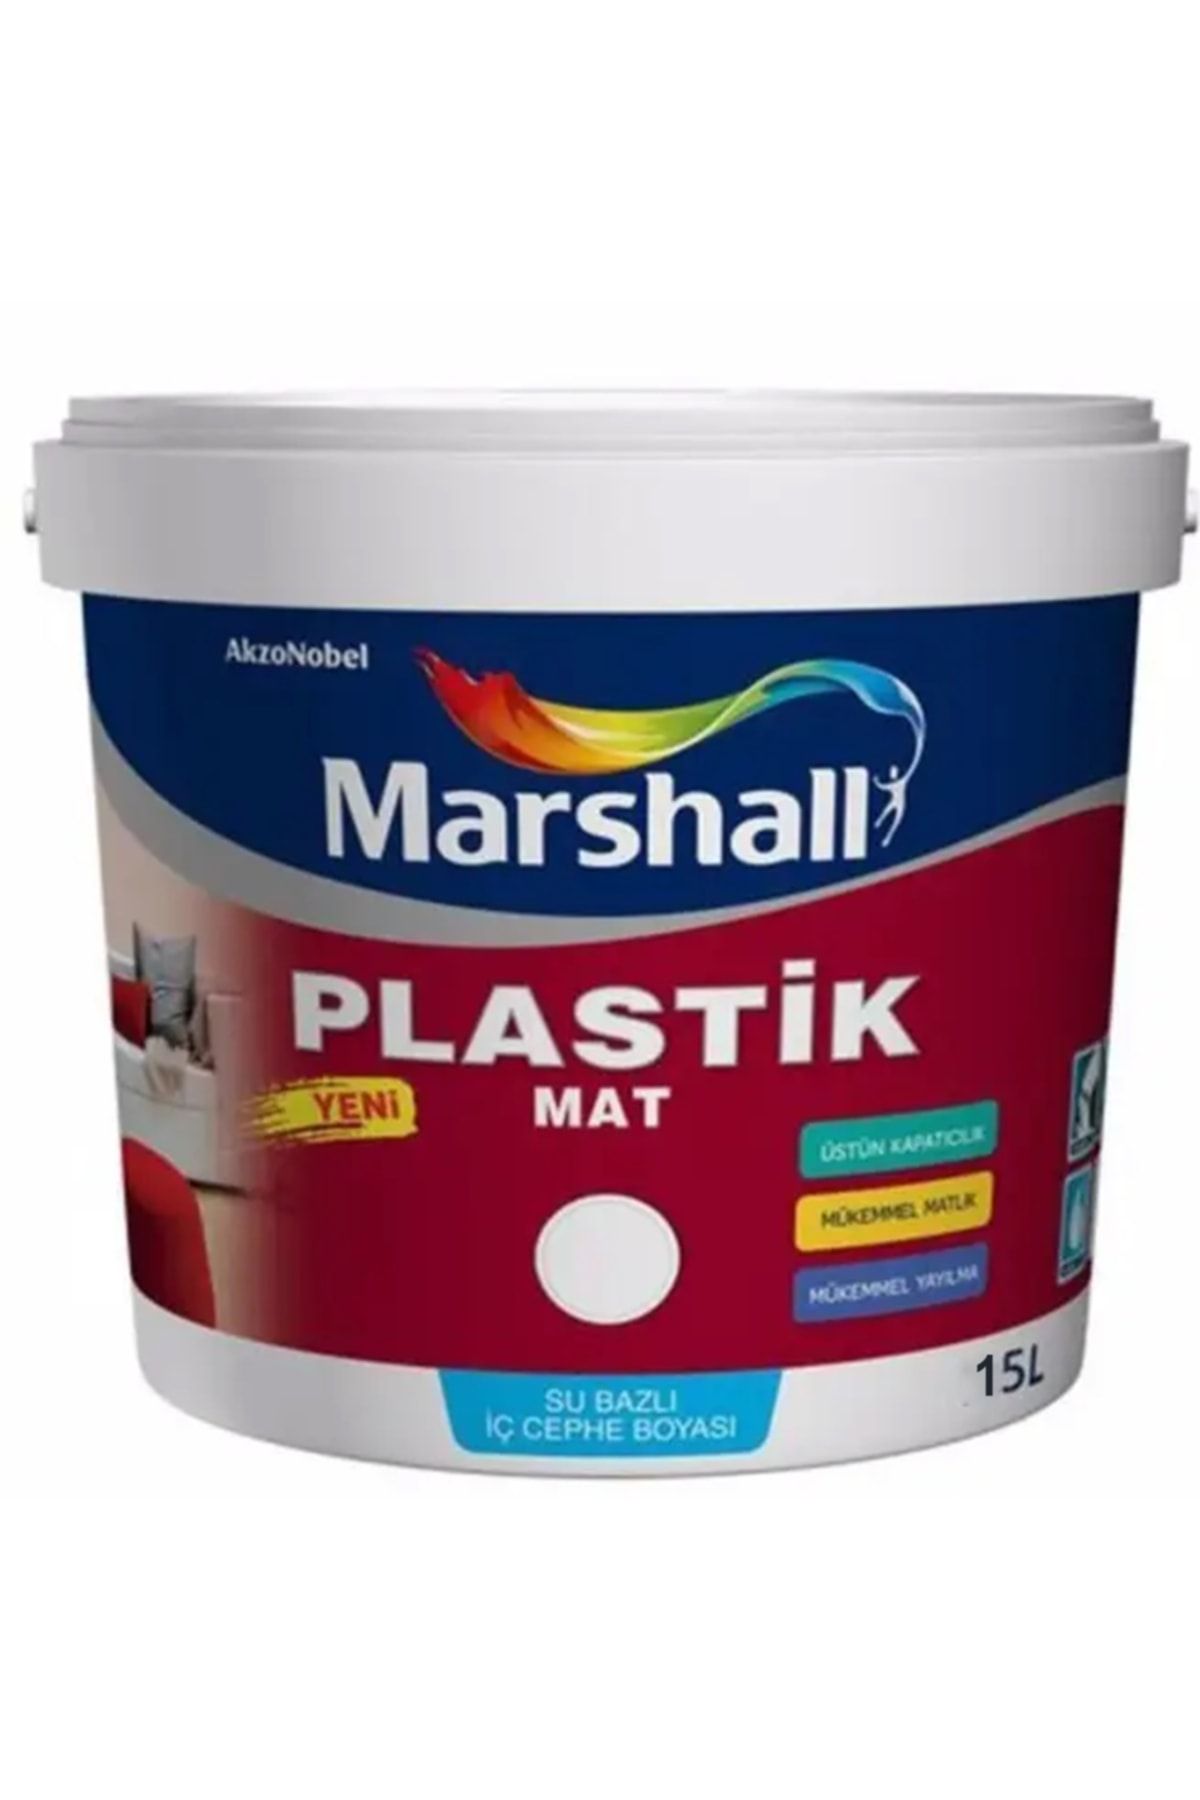 Marshall Plastik Mat Silinebilir Iç Cephe Boyası Lila 15 Lt (20 Kg)